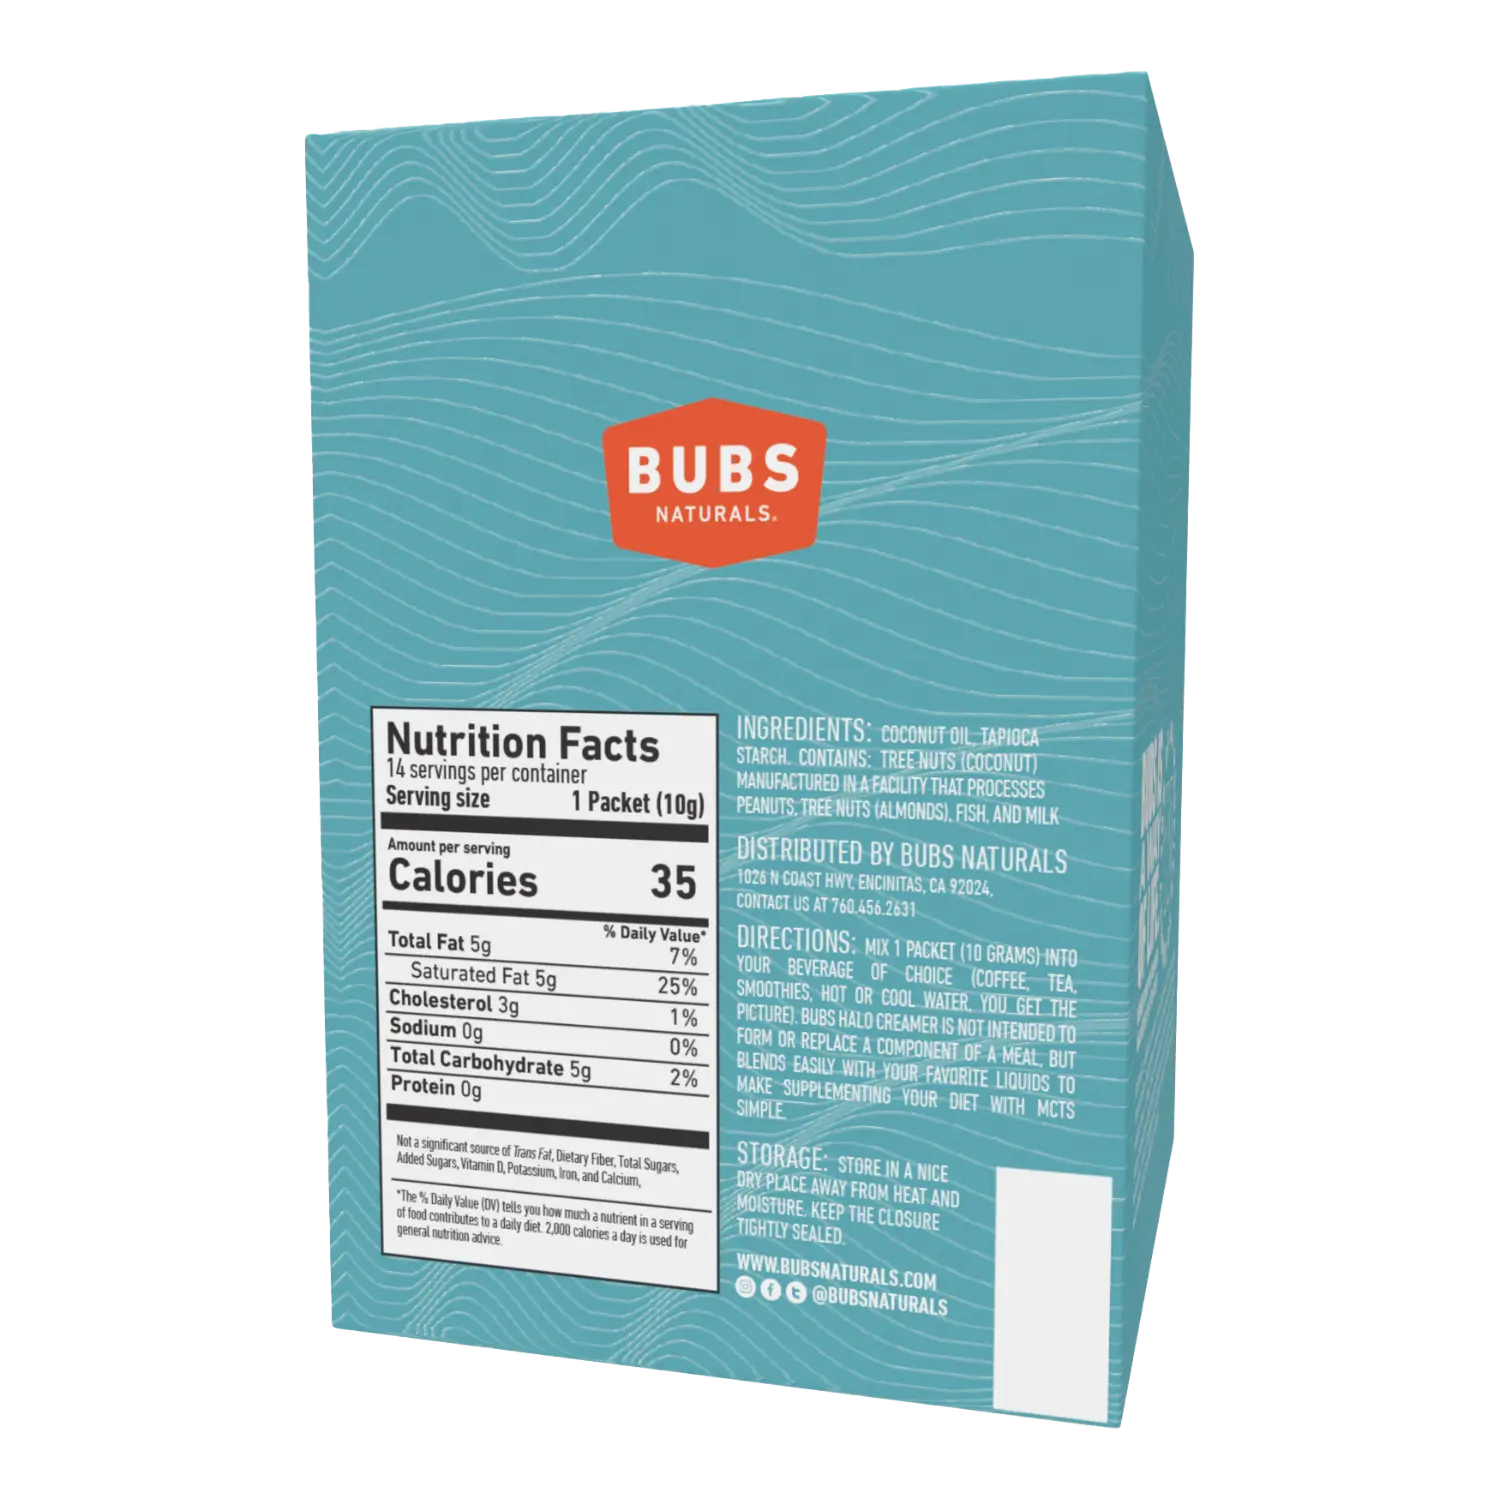 BUBS Naturals MCT Oil Powder, Vegan Halo Functional Creamer, 14ct travel pack,  back label